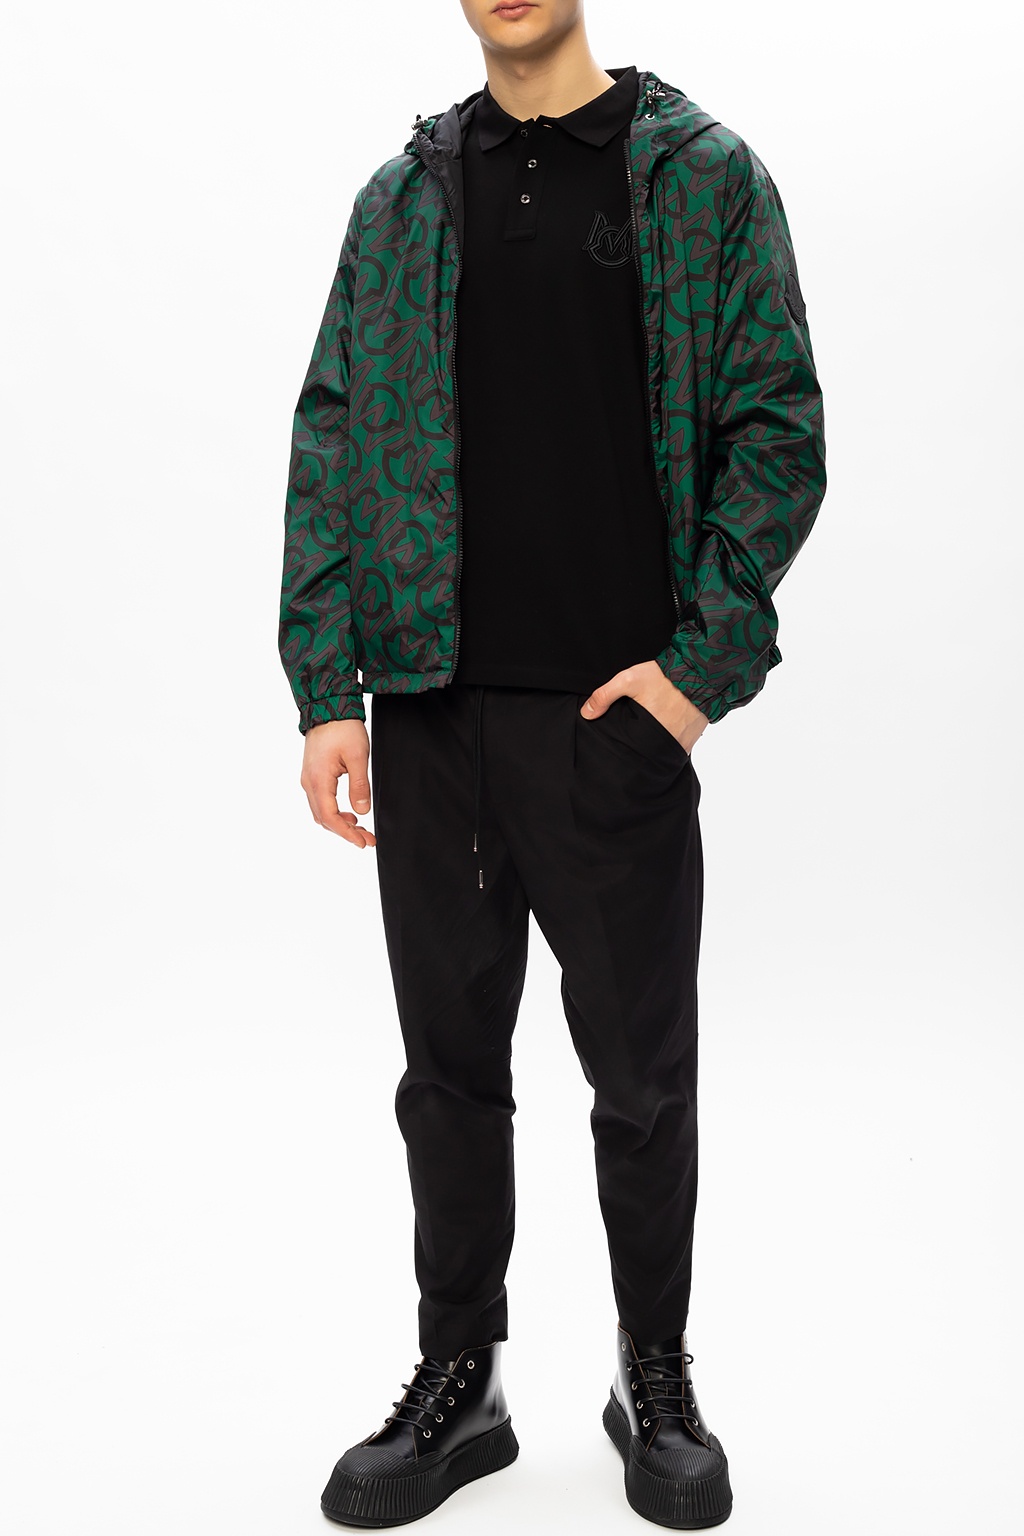 Green ‘Cretes’ reversible jacket with logo Moncler - Vitkac Germany